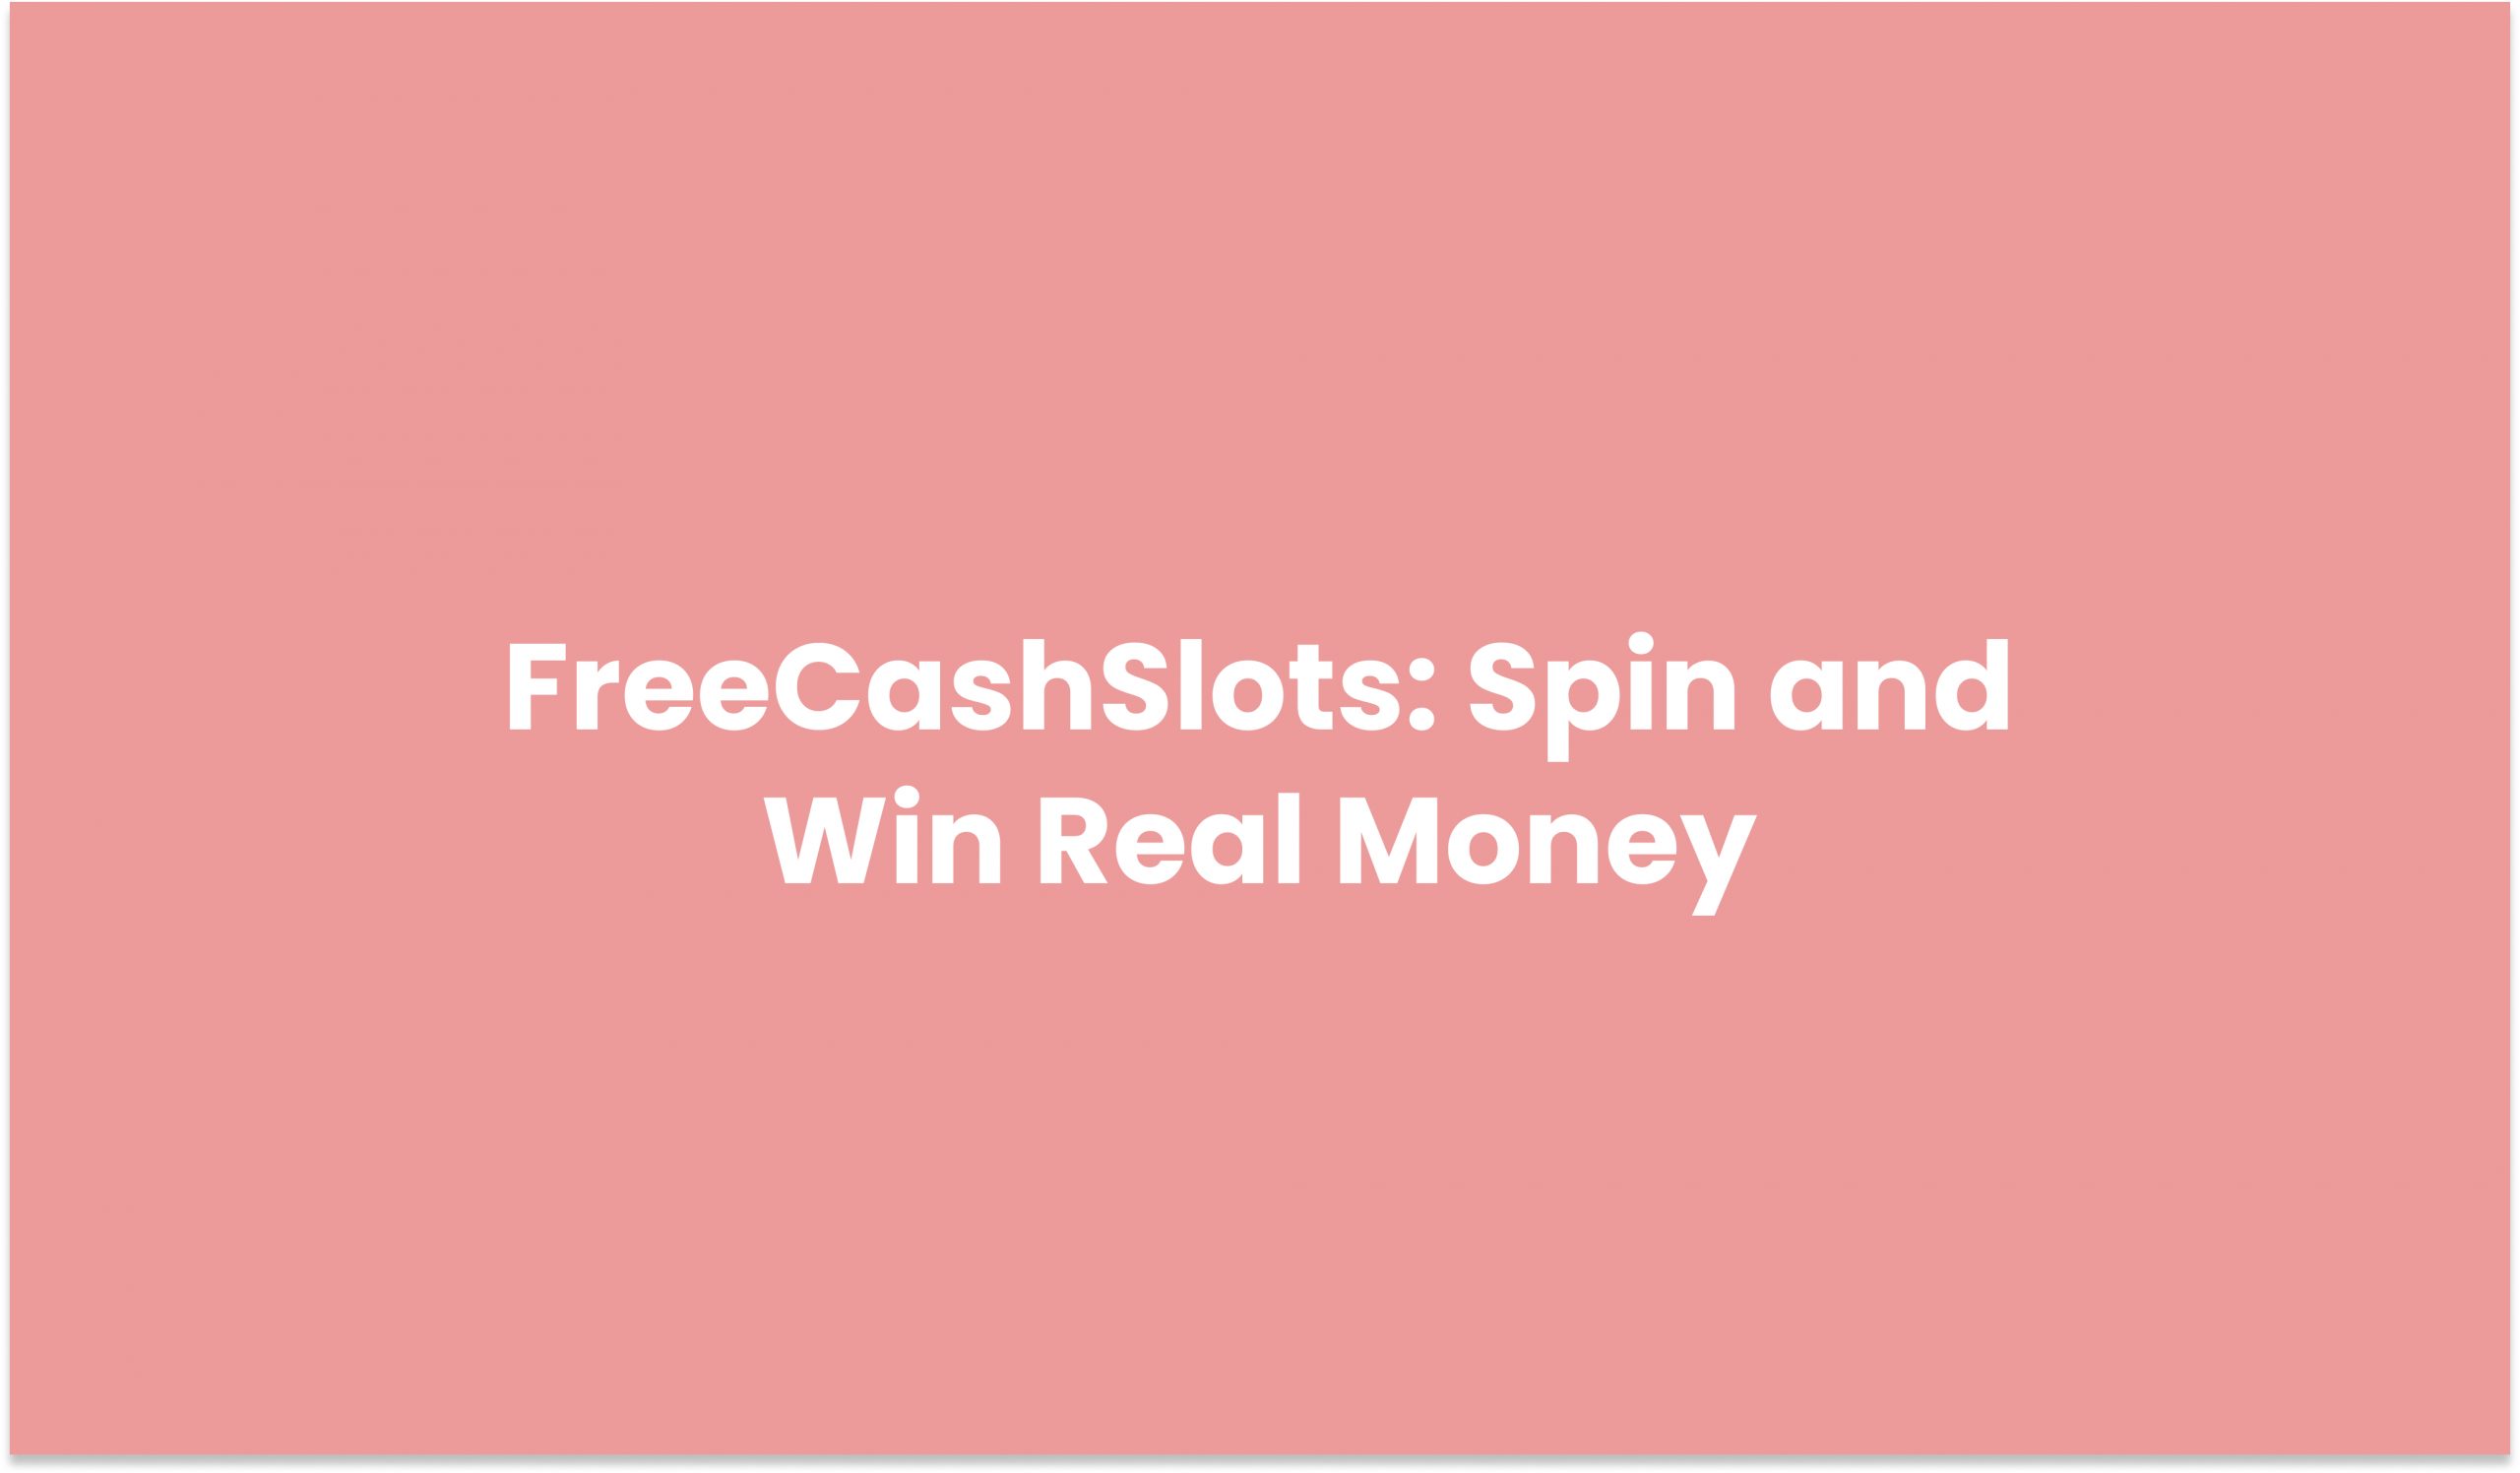 FreeCashSlots: Spin and Win Real Money